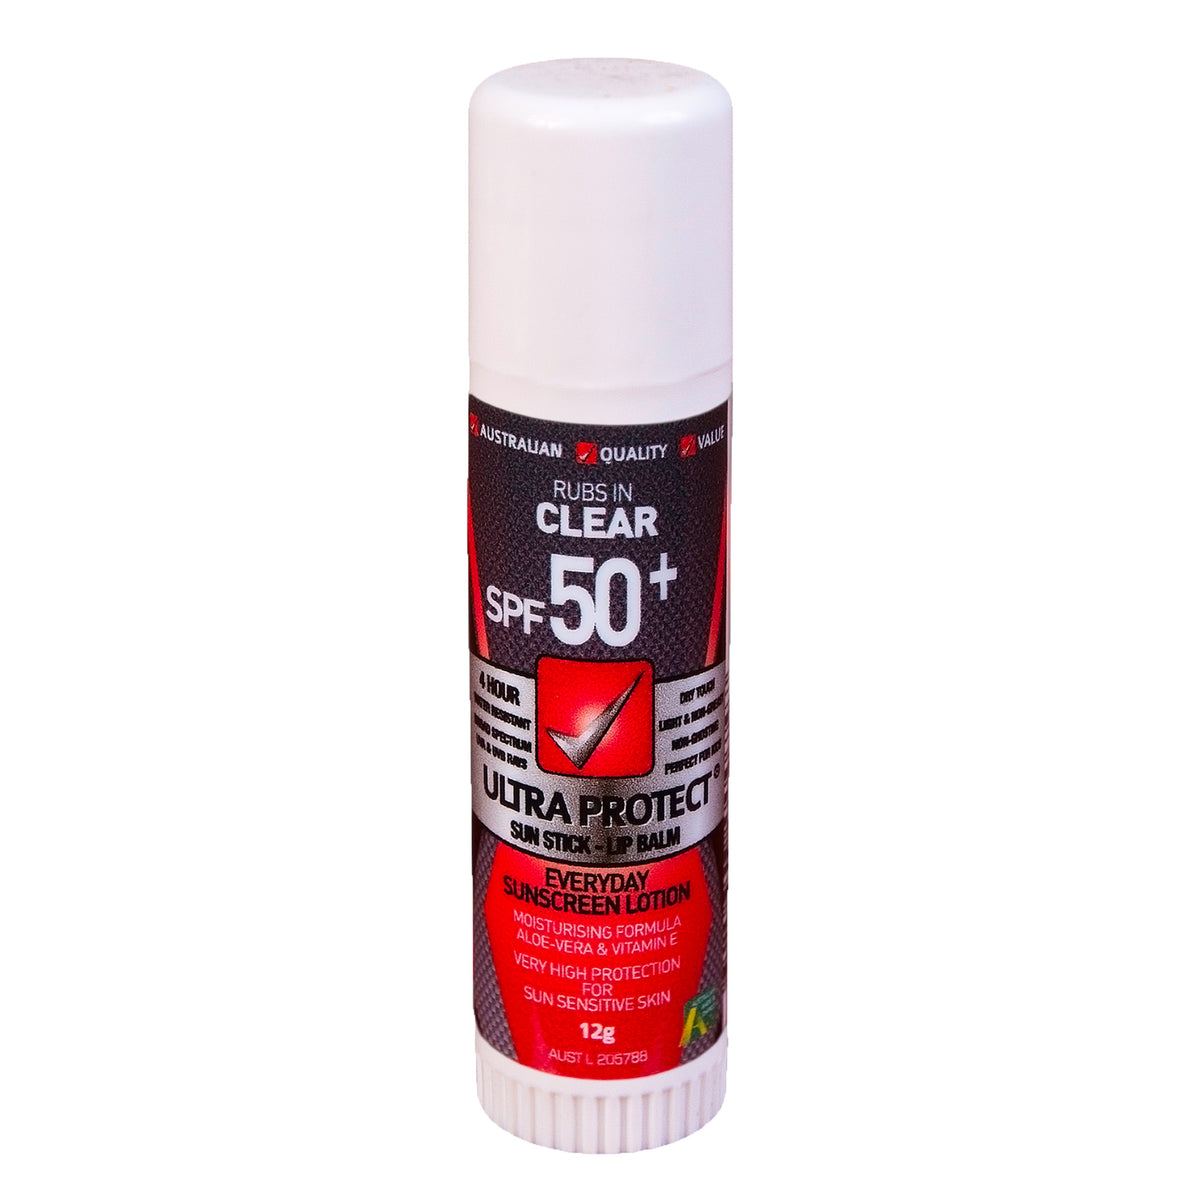 ultra protect sp50+ sunscreen 12g sunstick